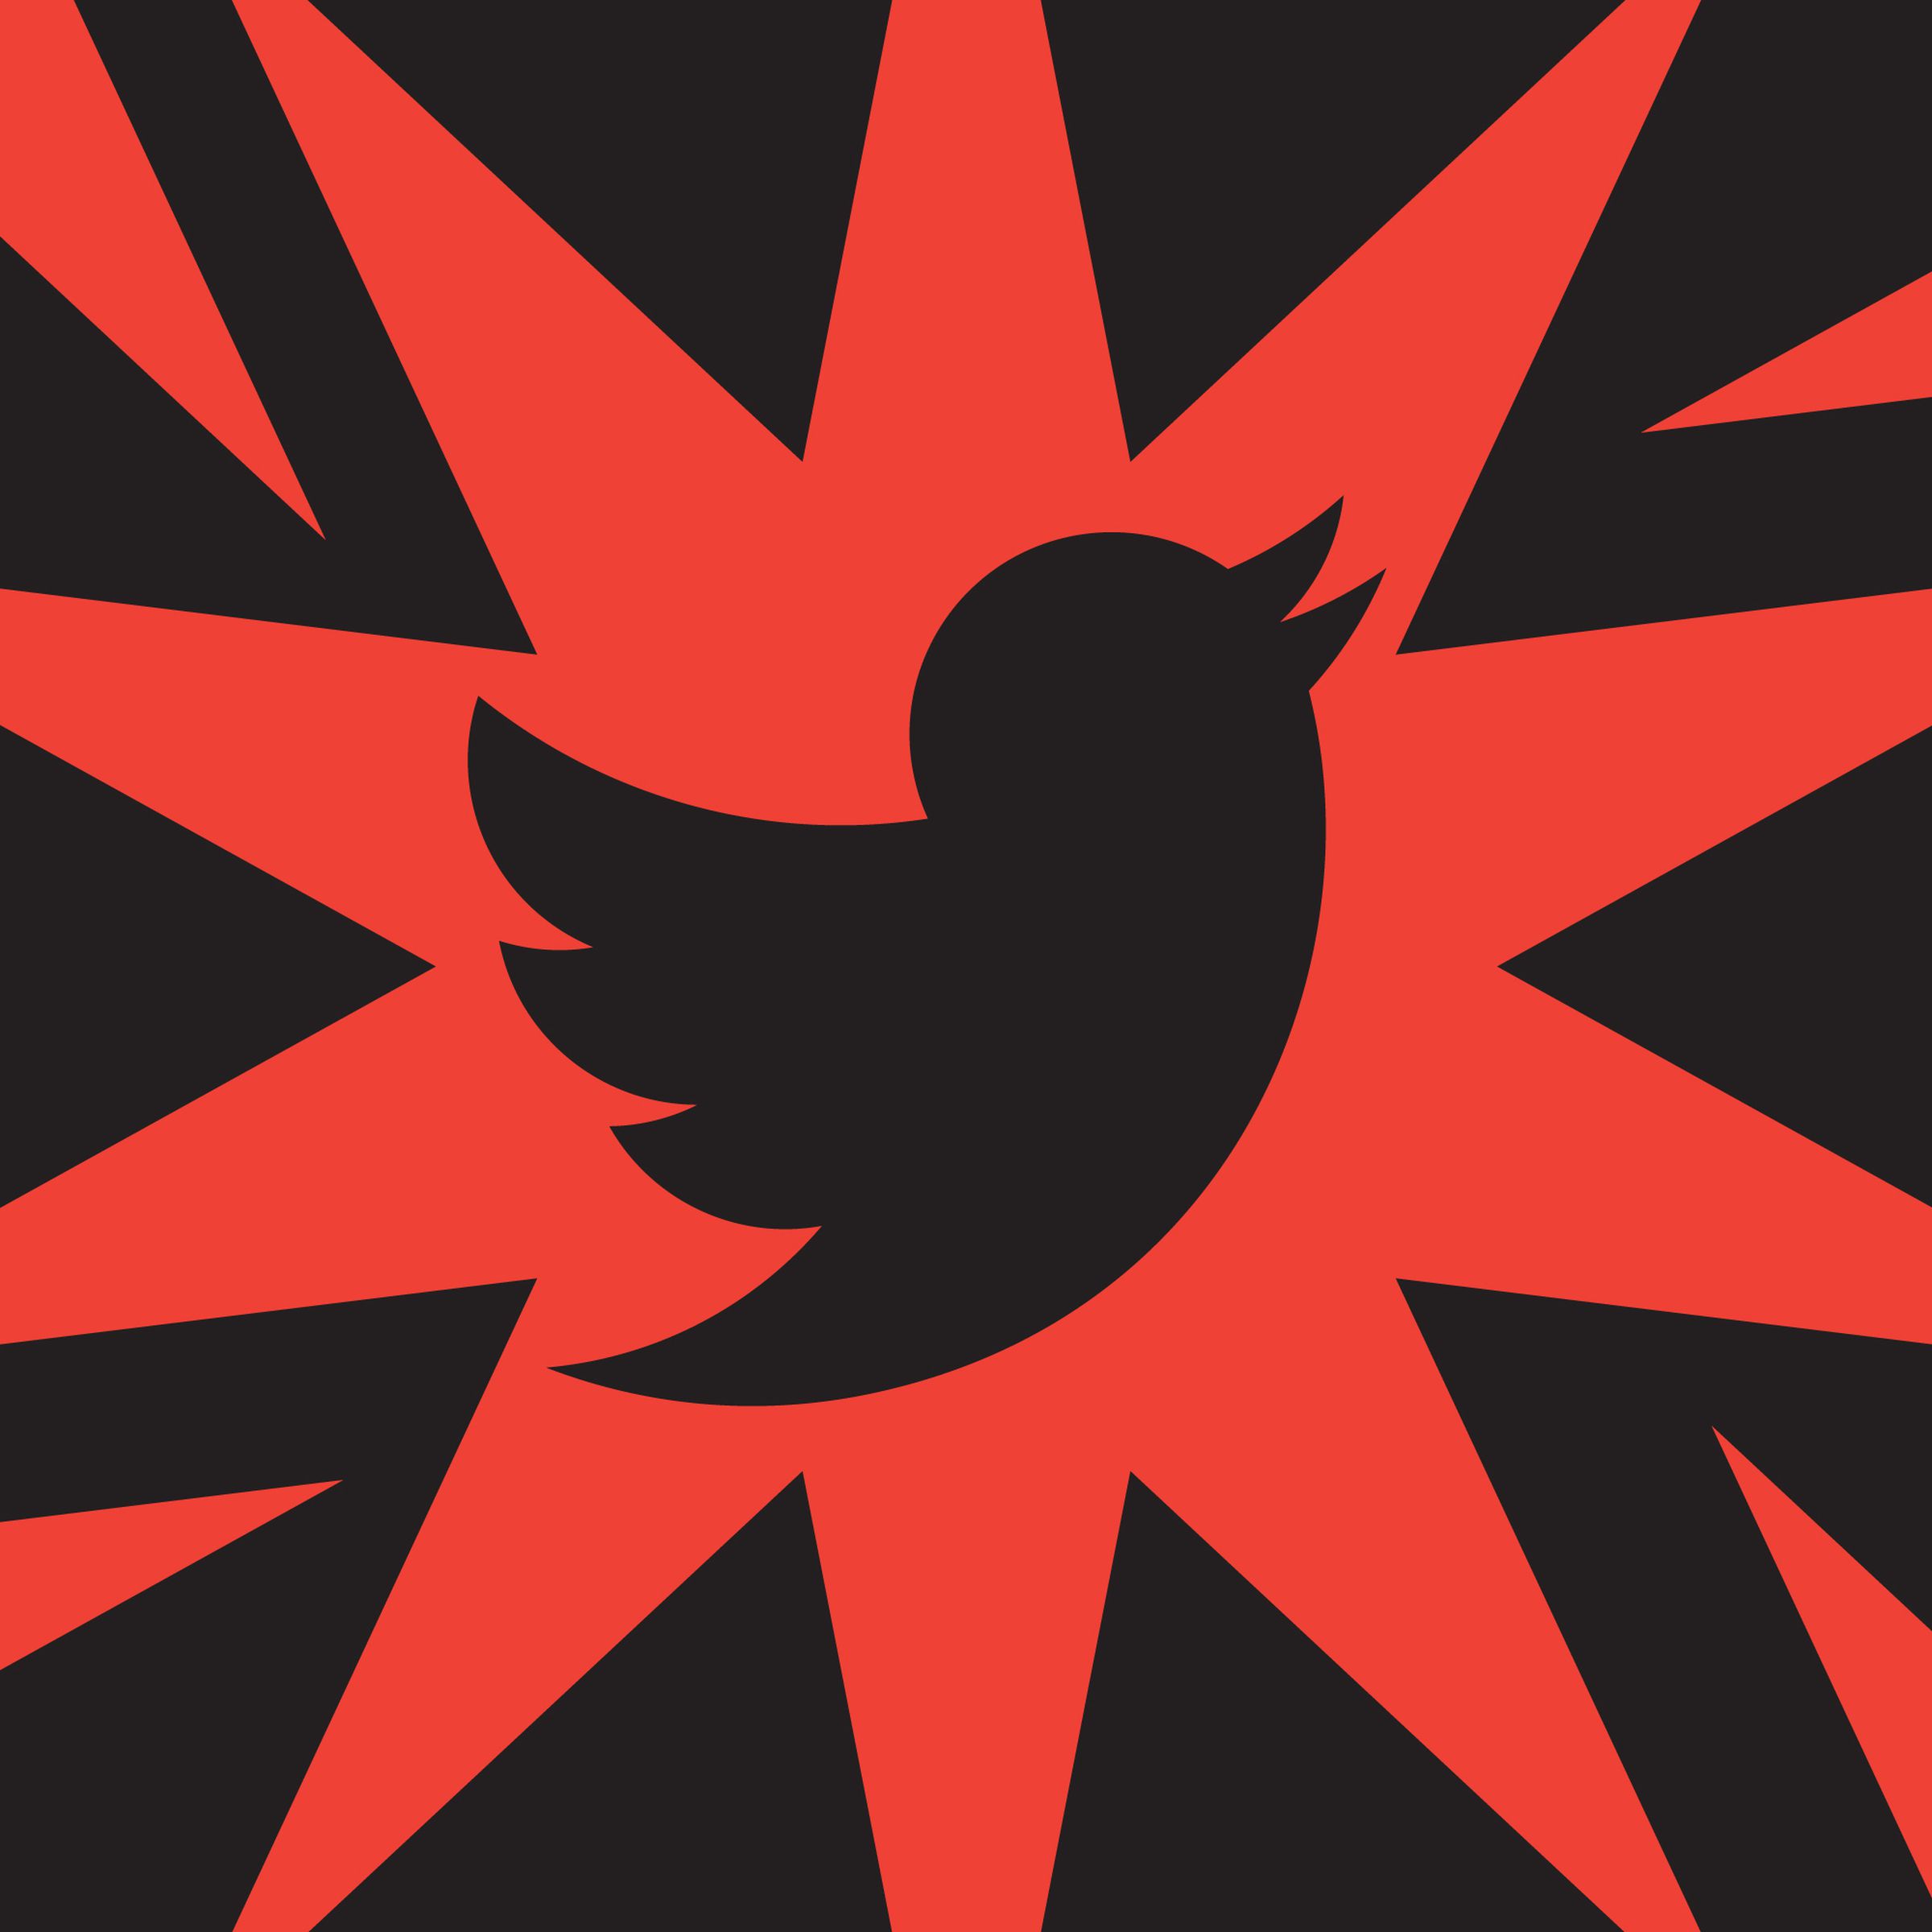 A black Twitter logo over a red illustration